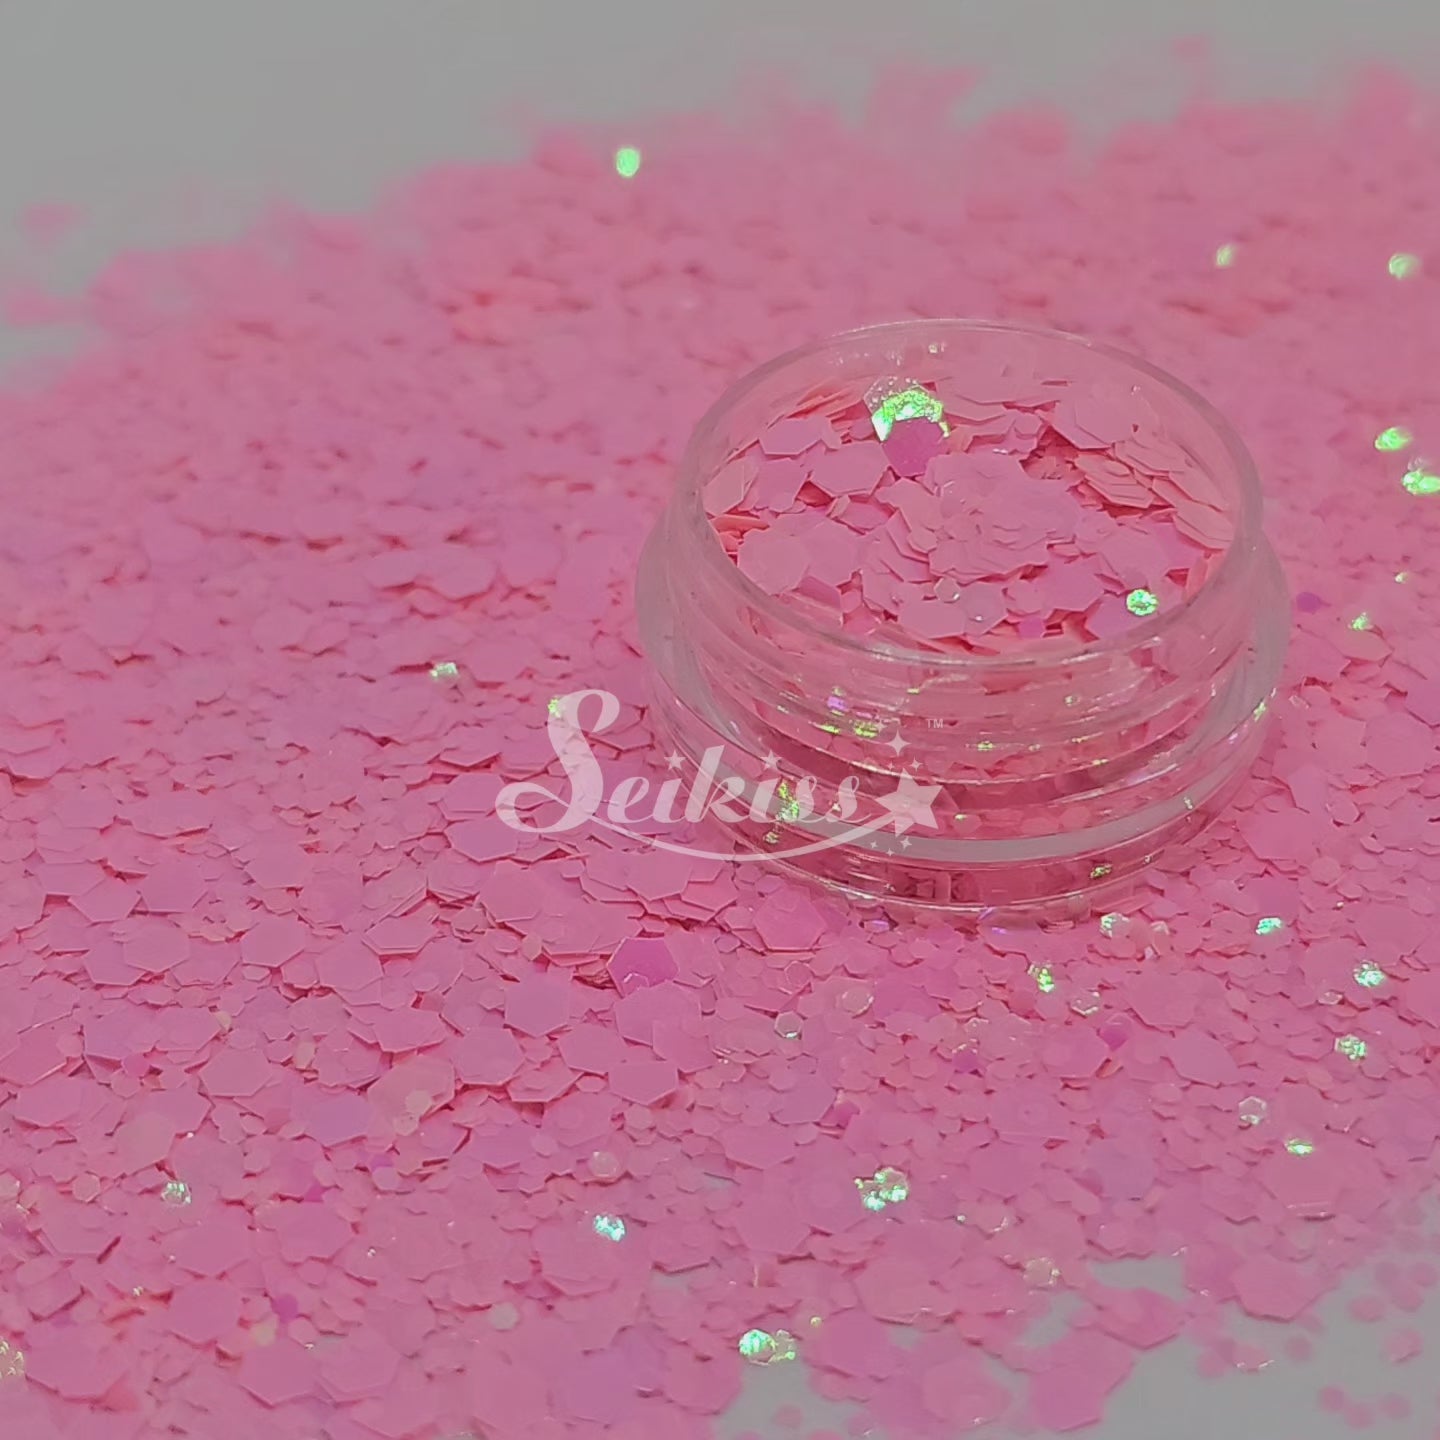 Strawberry Shake Metallic Chunky Glitter - Pink Glitter